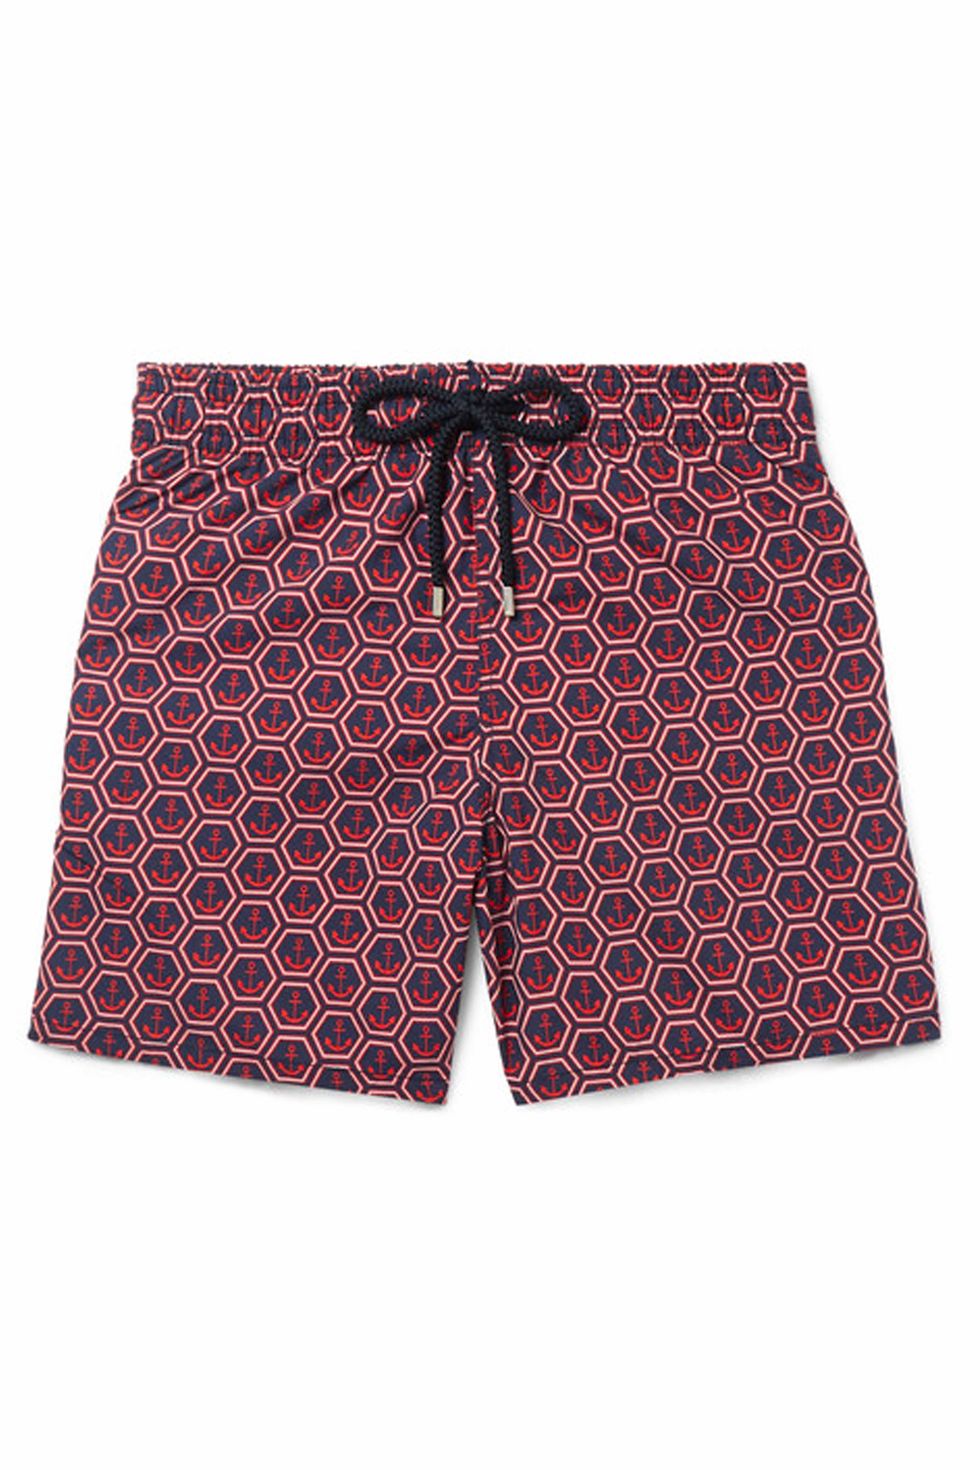 Louis Vuitton Red Luxury Summer Beach Shorts